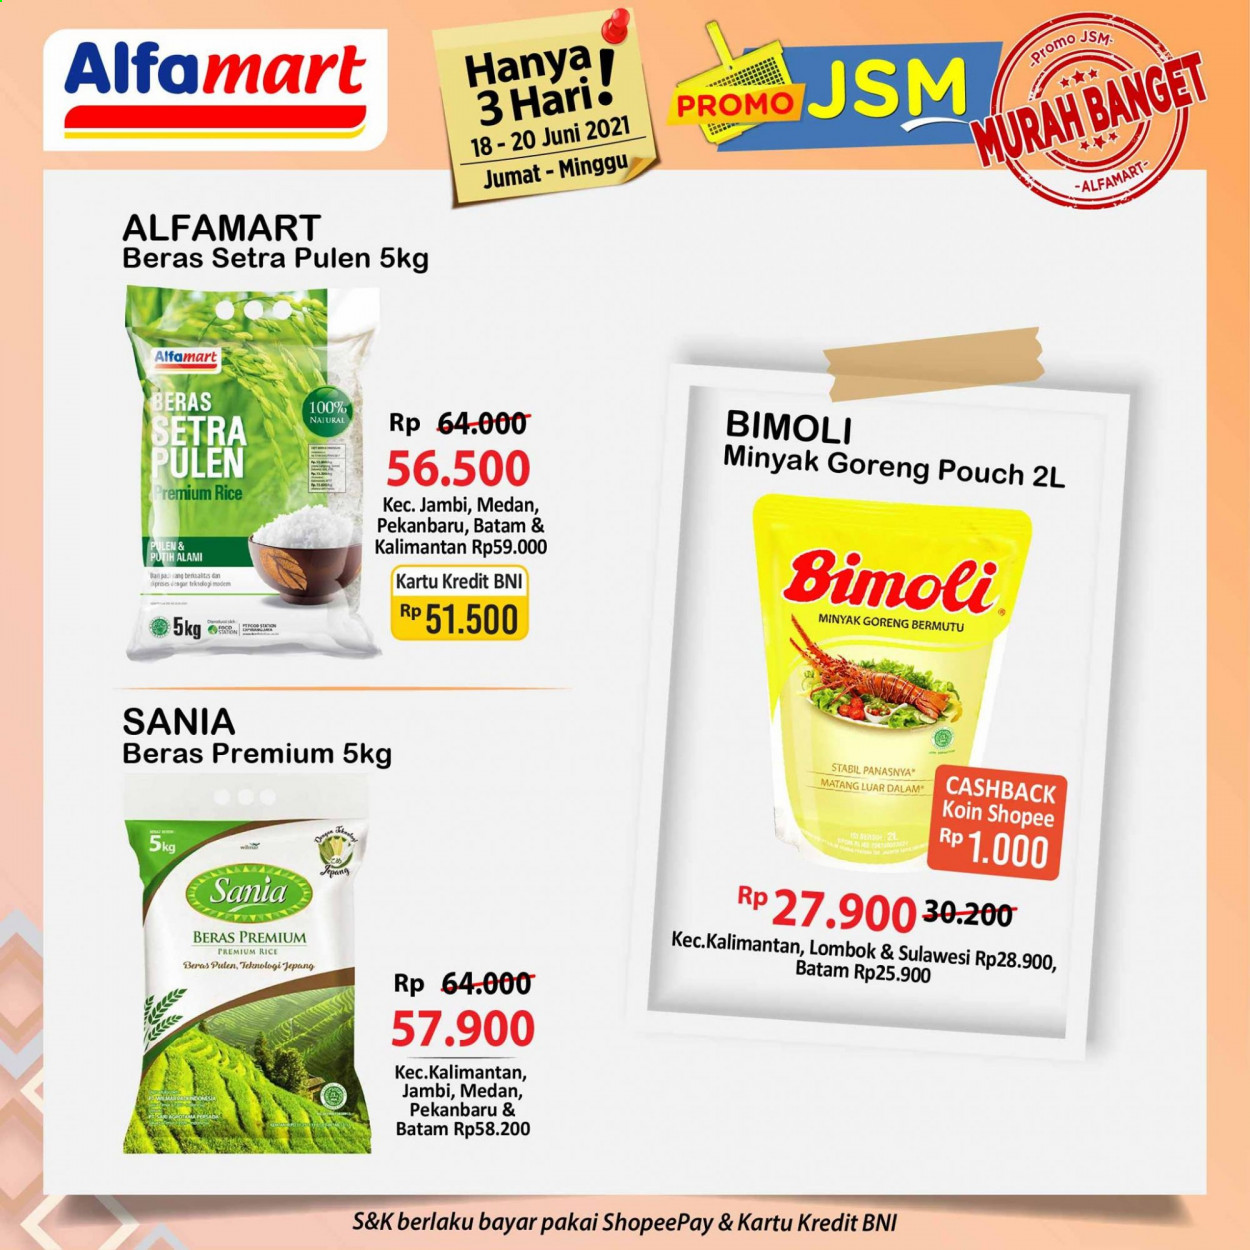 thumbnail - Promo Alfamart - 06/18/2021 - 06/20/2021 - Produk diskon - rice, goreng, minyak, minyak goreng, minyak goreng pouch, beras. Halaman 4.